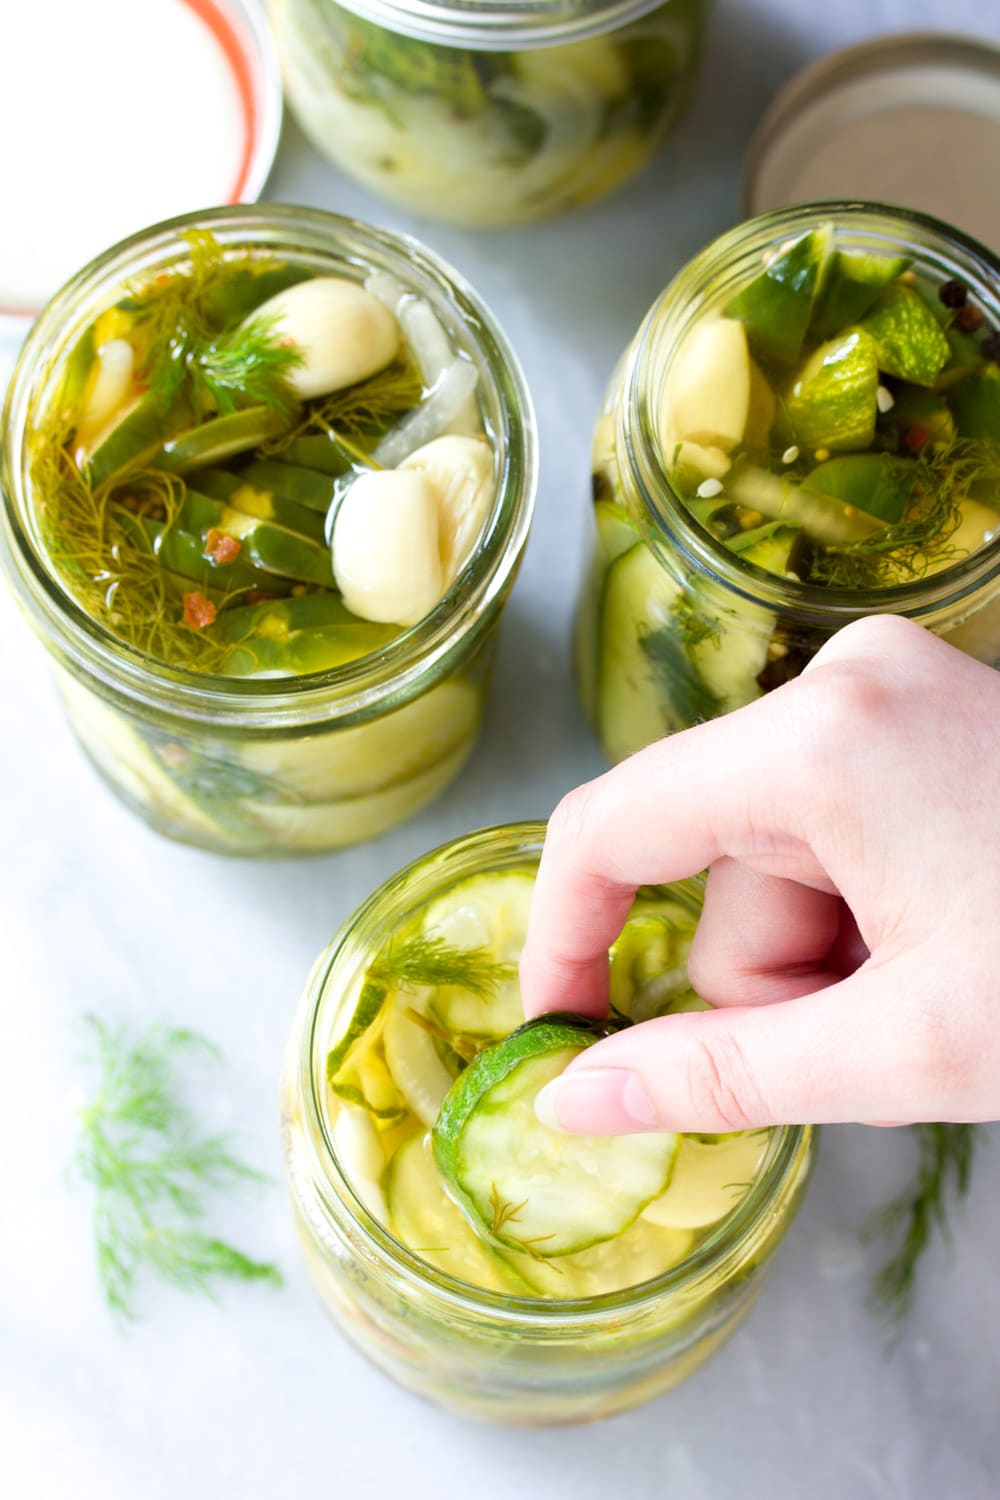 Refrigerator Pickles Recipe #ASpicyPerspective #Pickles #RefrigeratorPickles #HomemadePickles #PickleRecipe #HowtoMakePickles